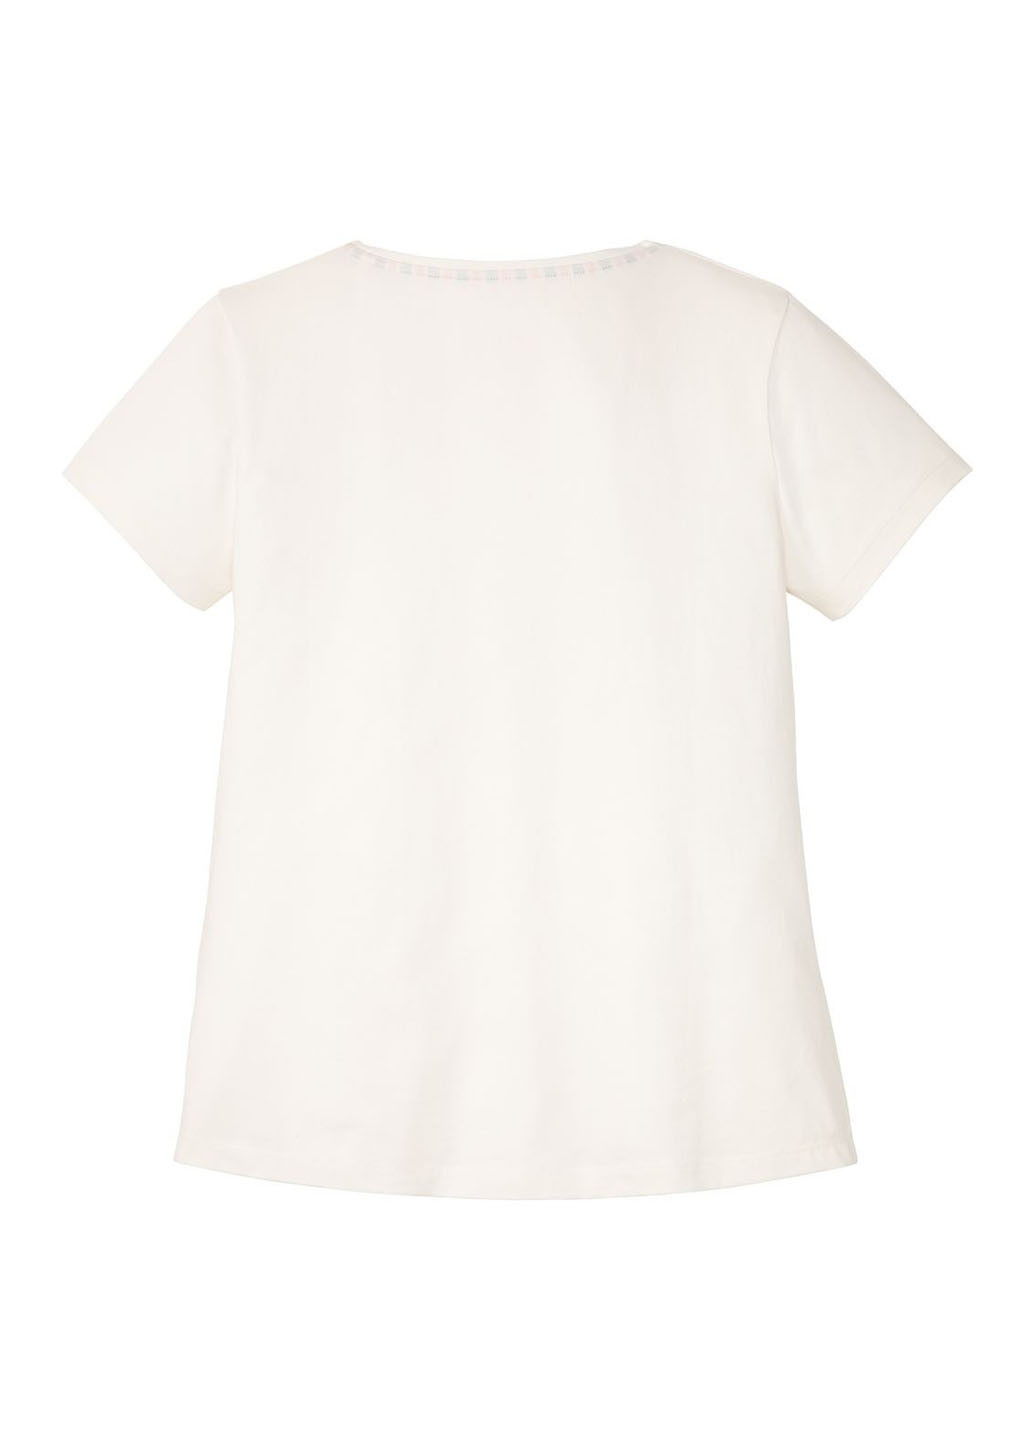 Молочная всесезон пижама (футболка, шорты) футболка + шорты Esmara